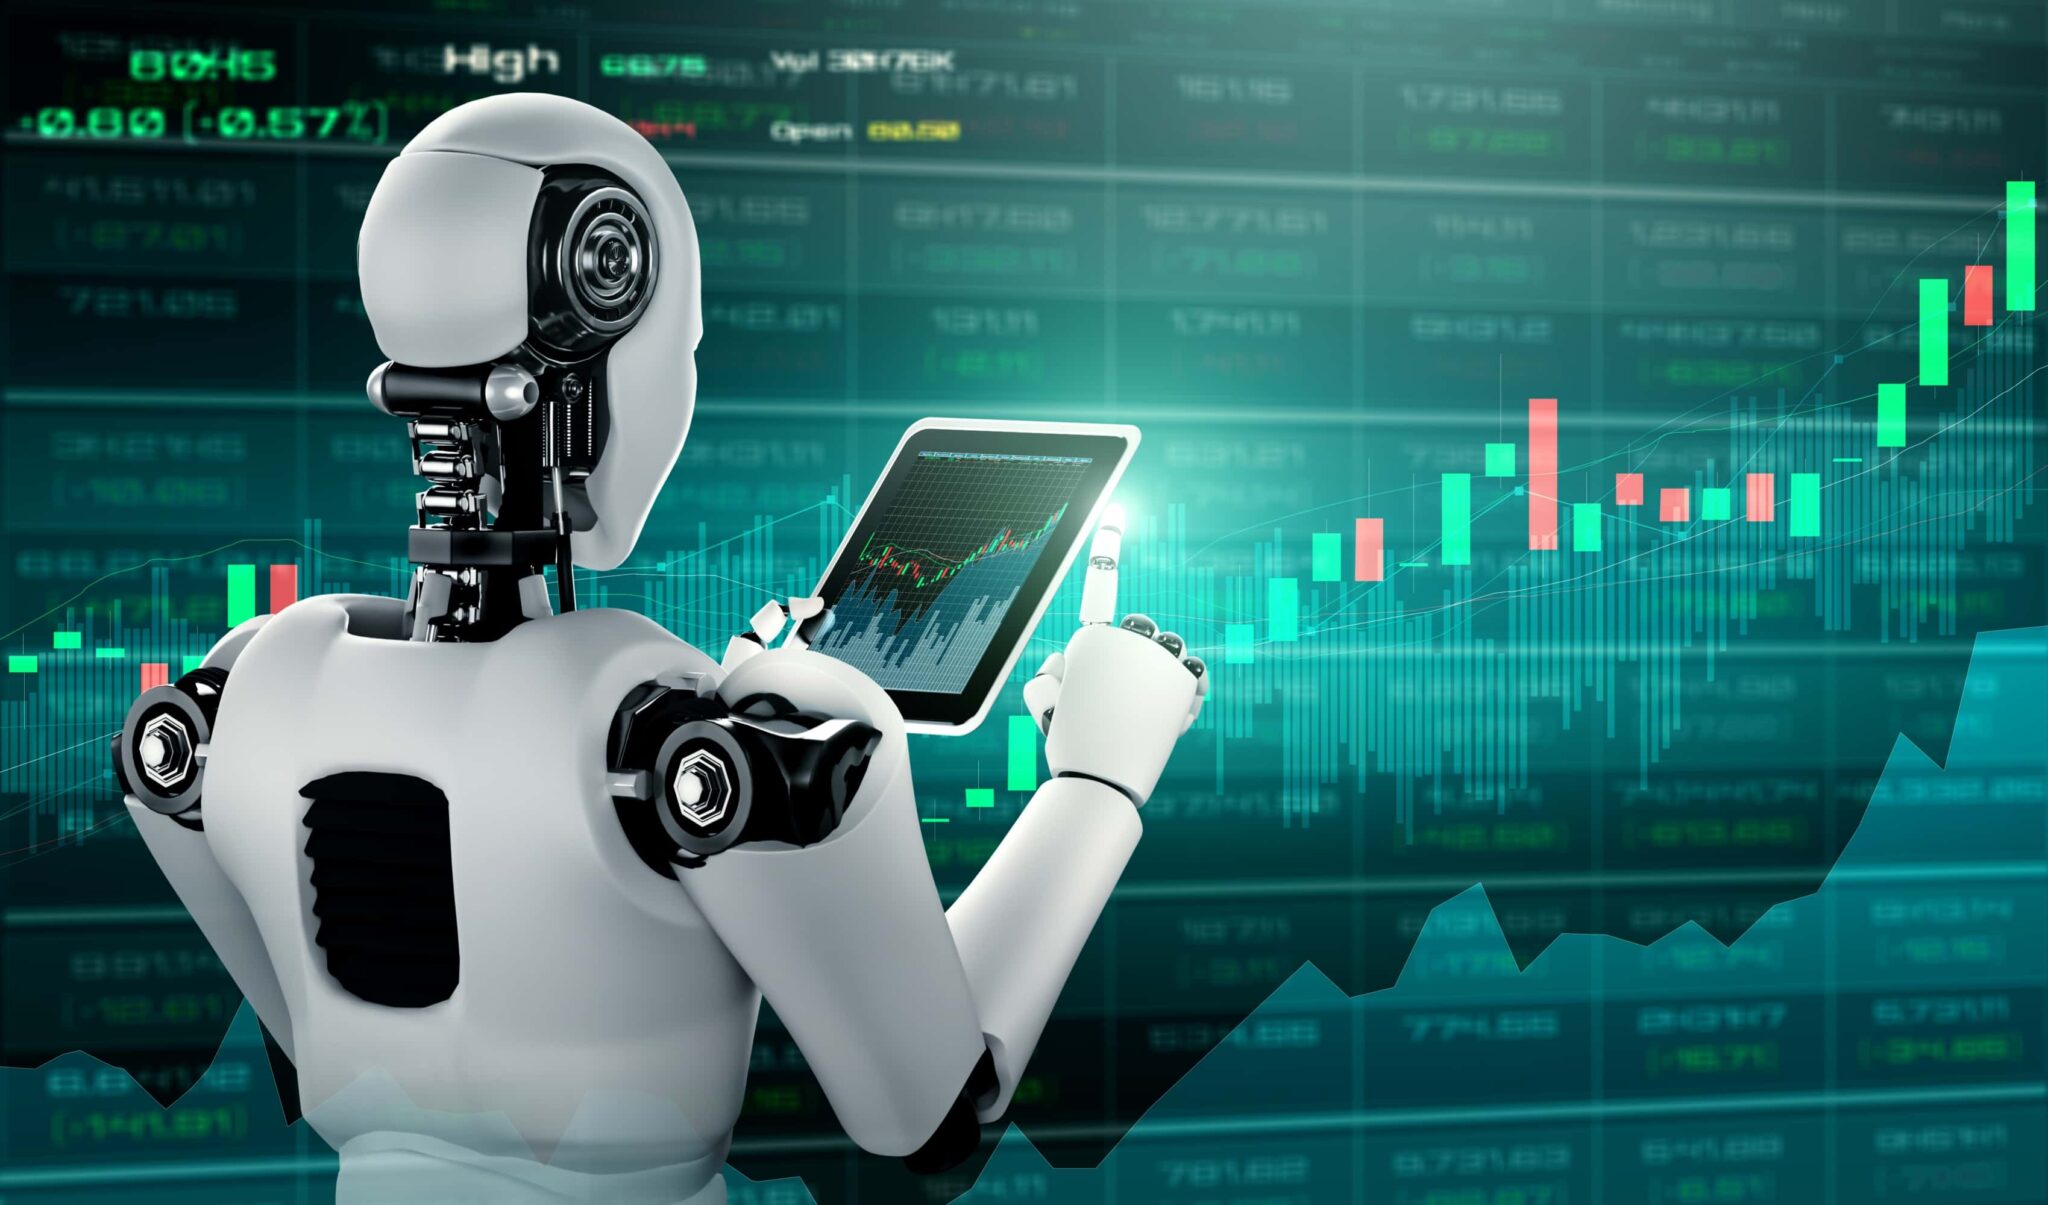 Forex robot trading software free arbitrage tools crypto